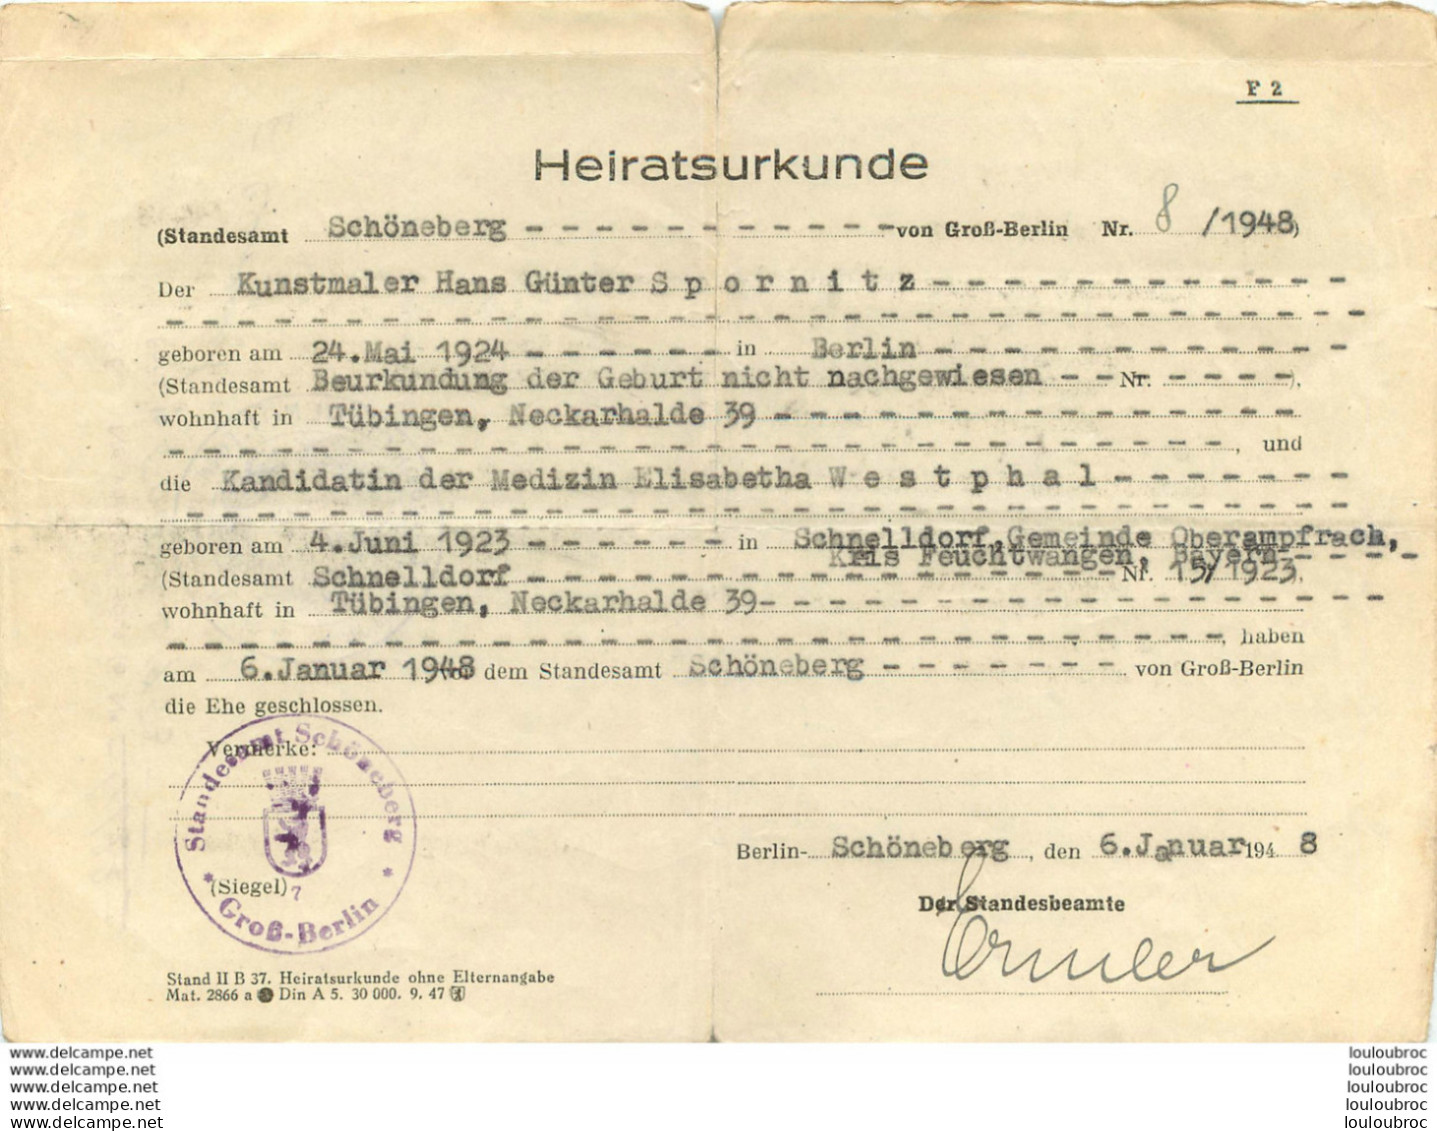 HEIRATSURKUNDE ACTE DE MARIAGE  01/1948 SCHONEBERG KUNSTMALER HANS ET KANDIDATIN DER MEDIZIN ELISABETHA - Historical Documents